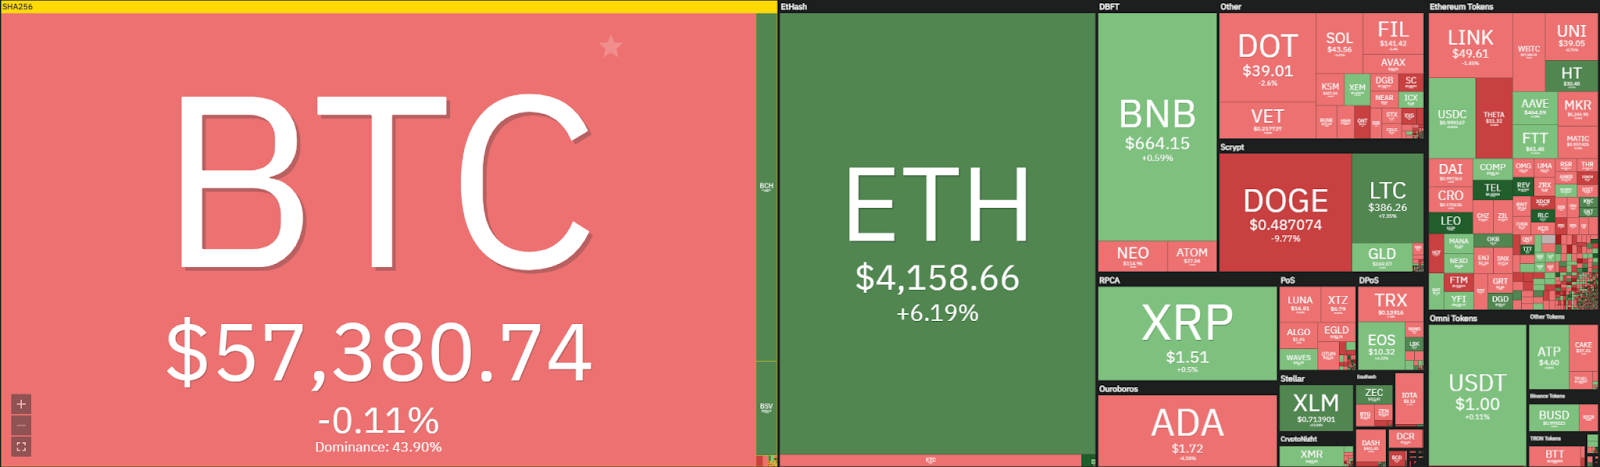 Ethereum price prediction: Ethereum reached $4,200, prepares to retrace? 1